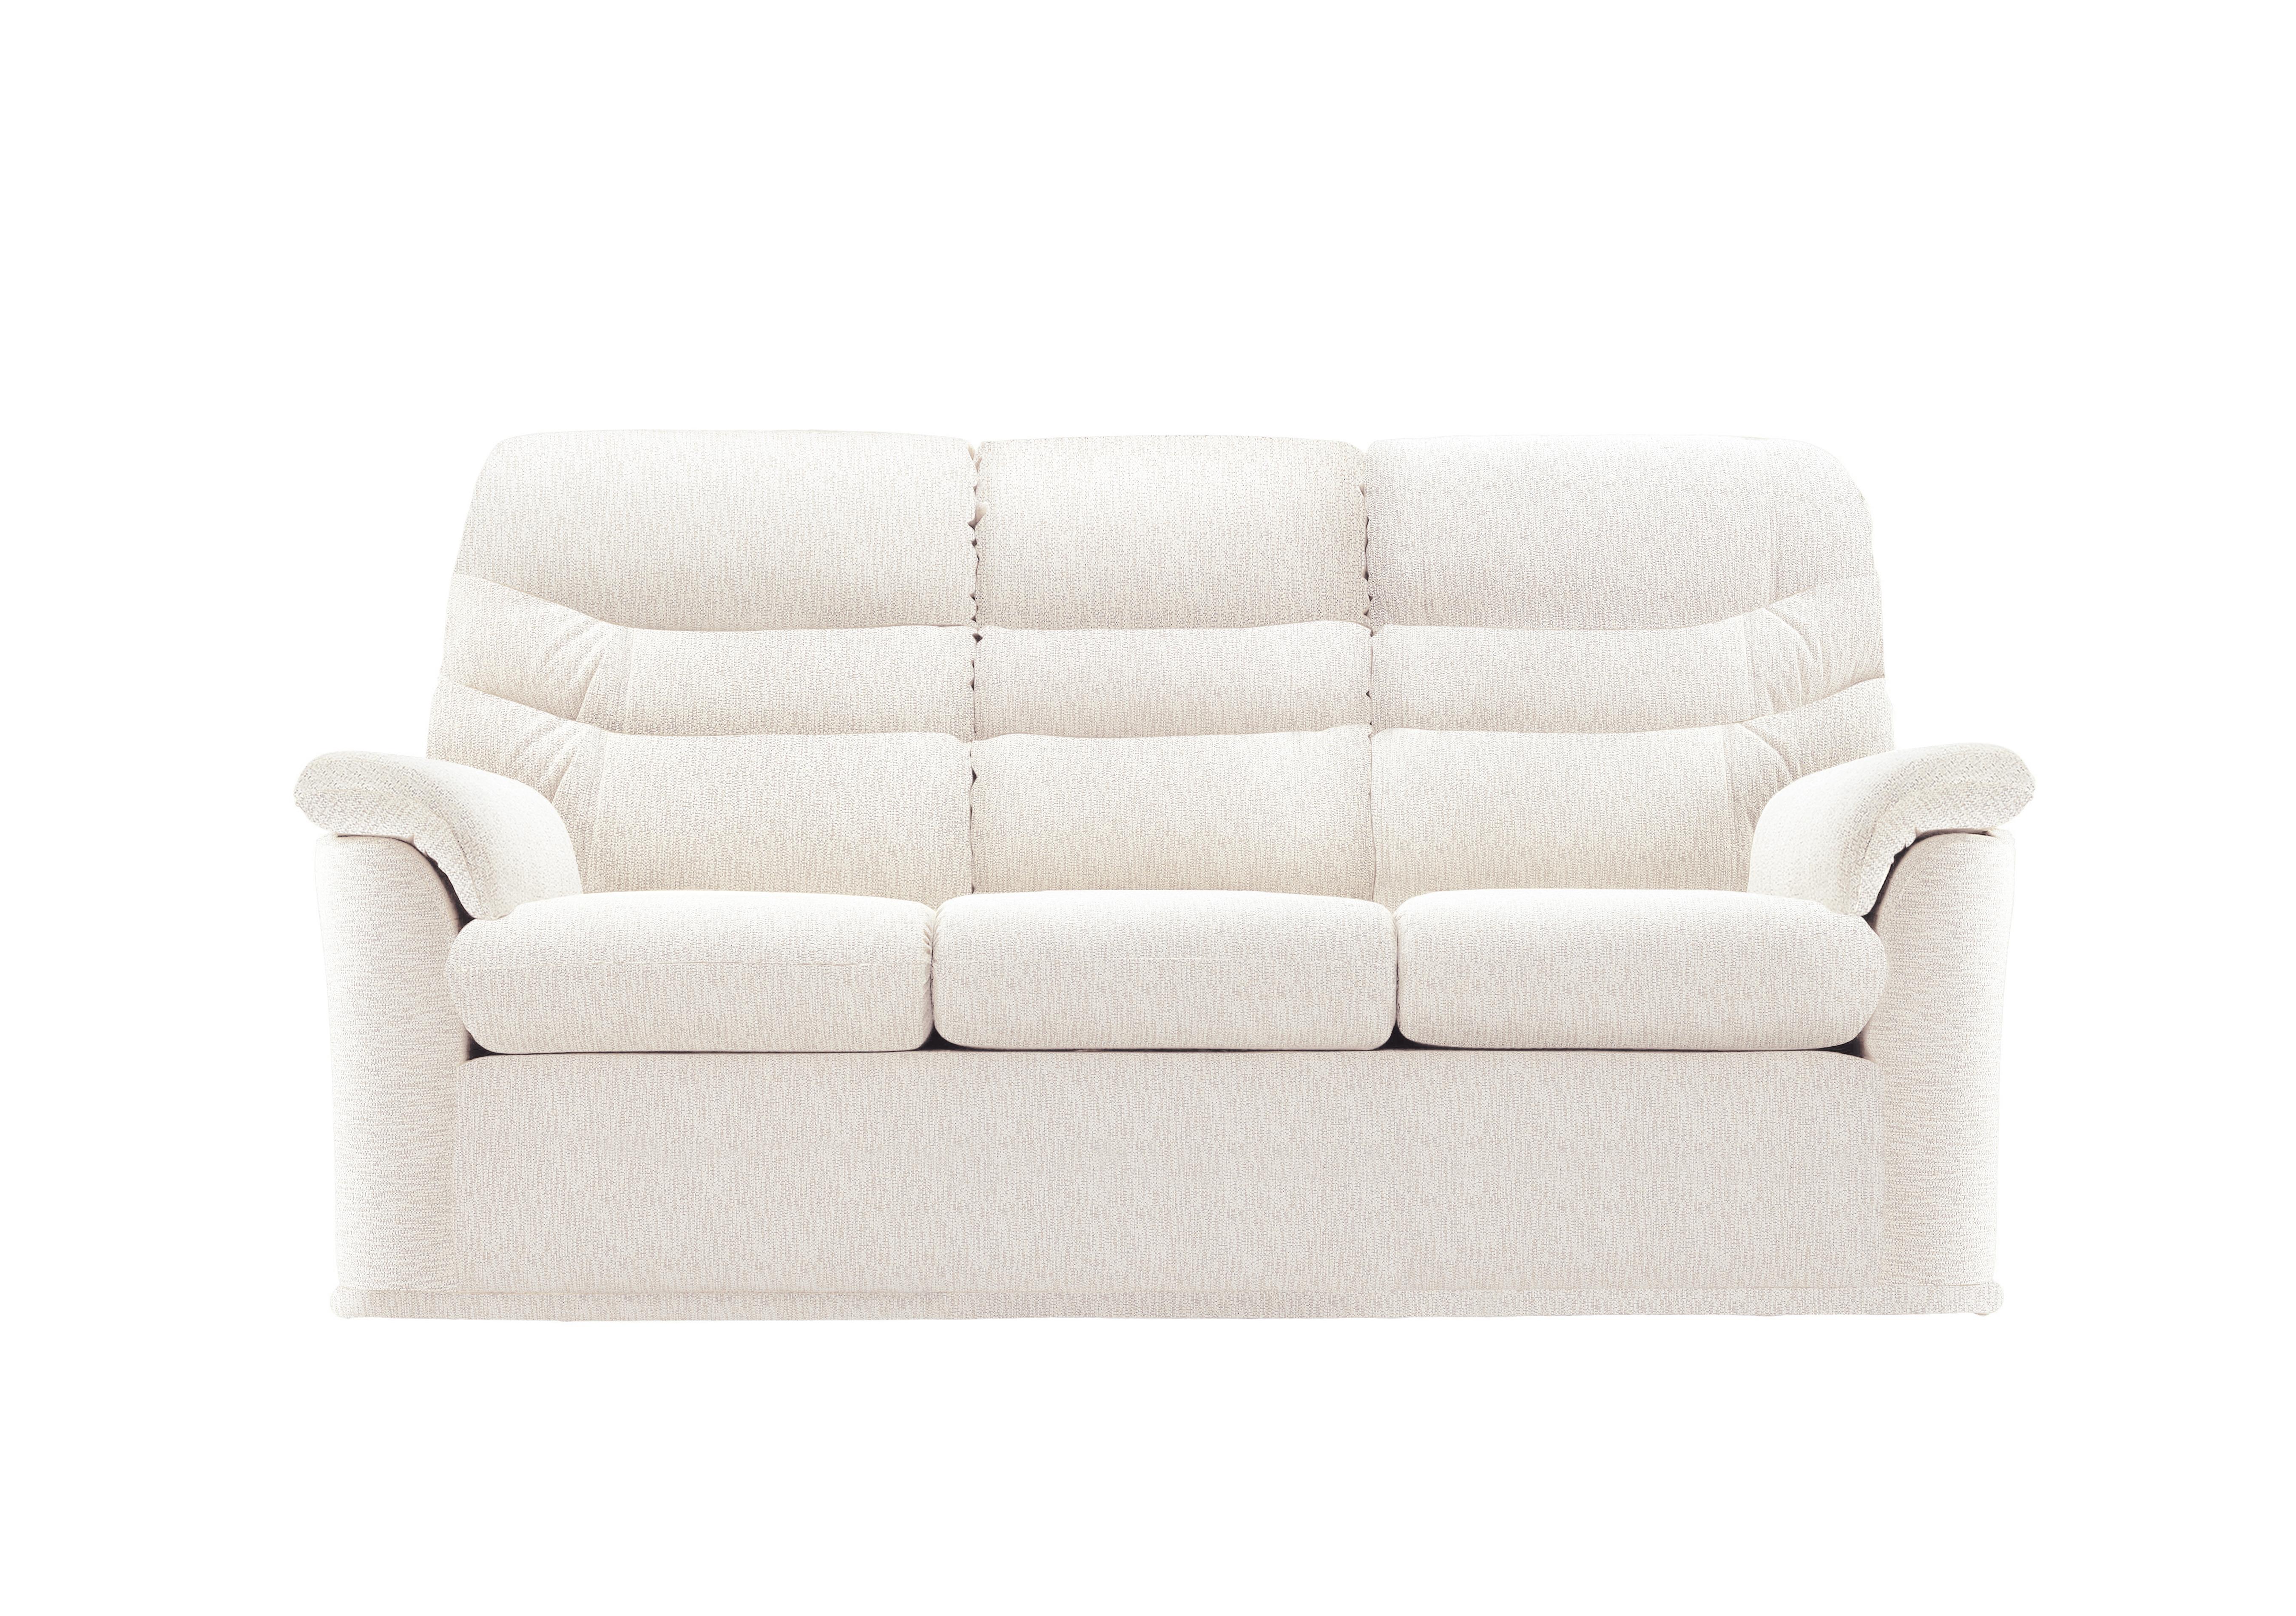 Malvern 3 Seater Fabric Sofa in C931 Rush Cream on Furniture Village